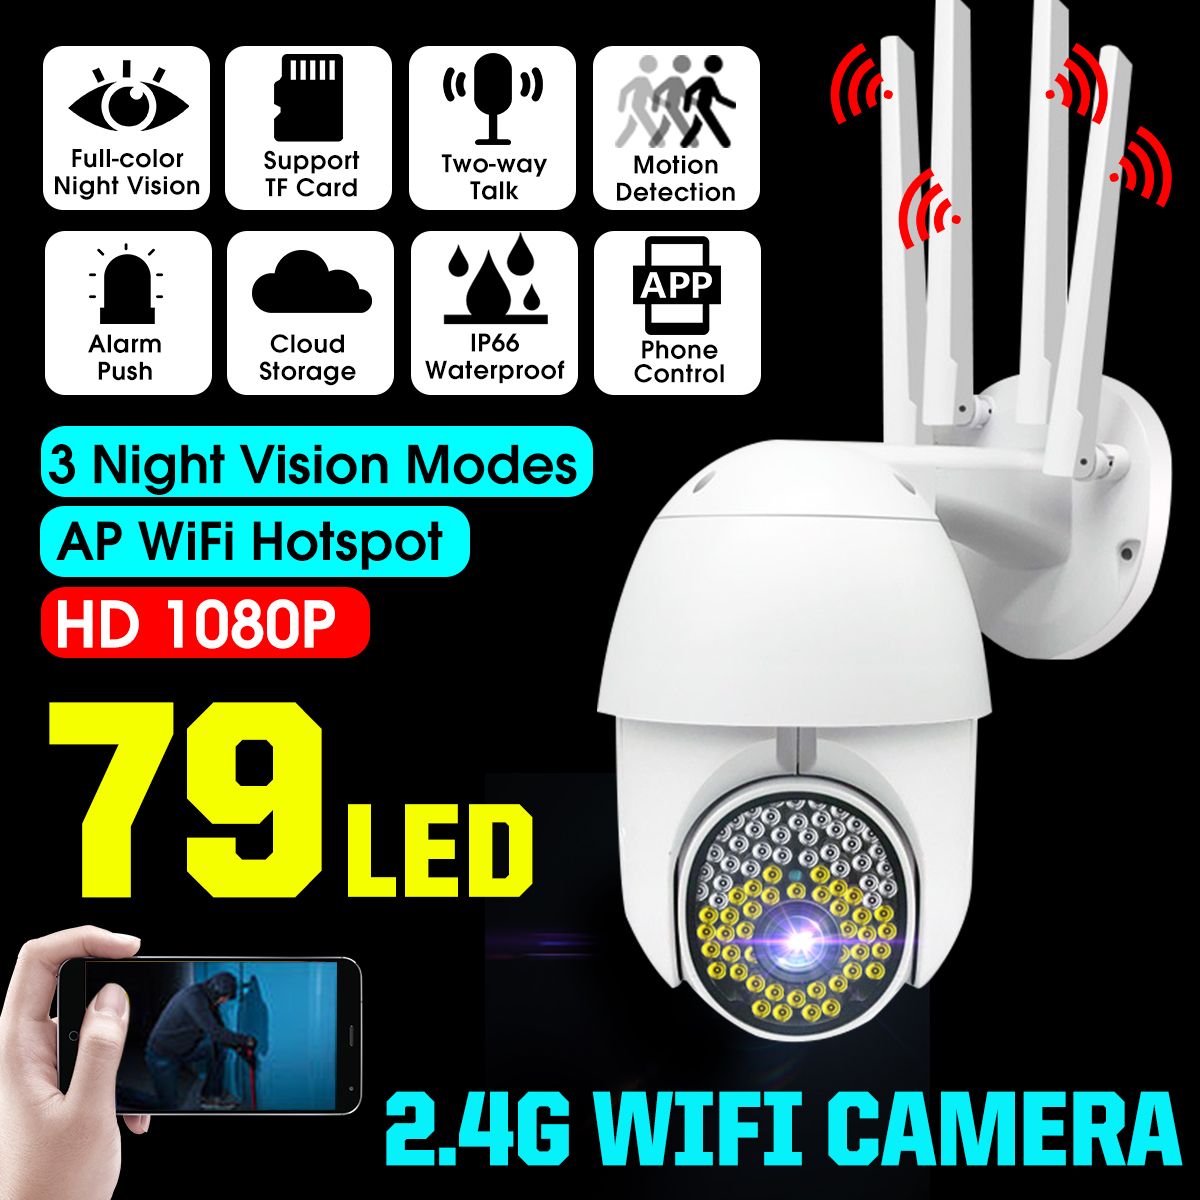 79-LED-20MP-1080P-WiFi-IP-Camera-Full-Color-Night-Vision-PanTilt-Rotation-ONVIF-IP66-Waterproof-1750981